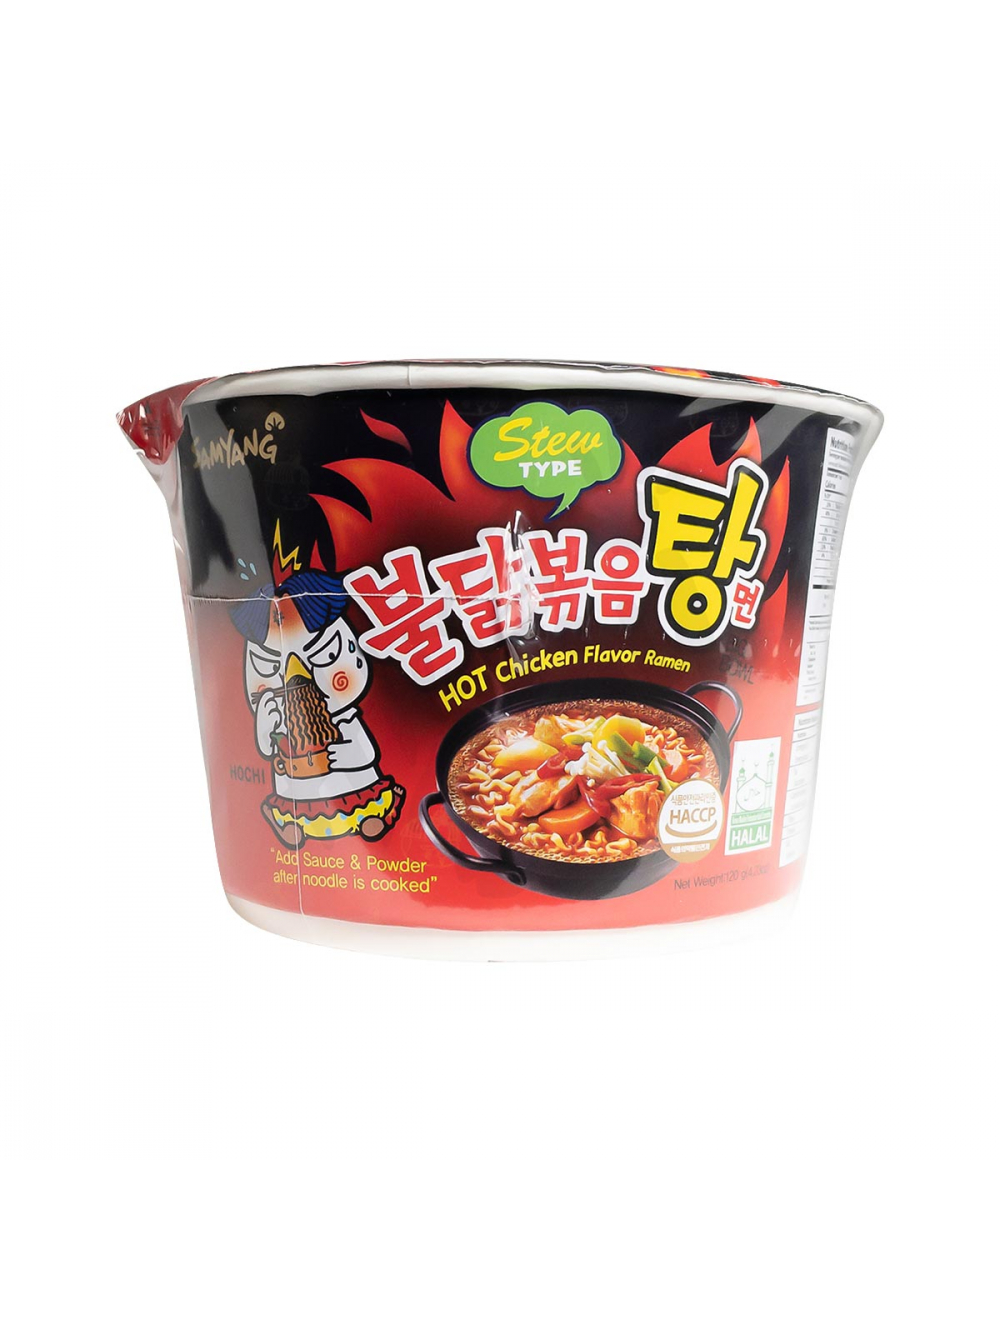 Samyang Stew Type Hot Chicken Flavour Ramen (Soup Noodles